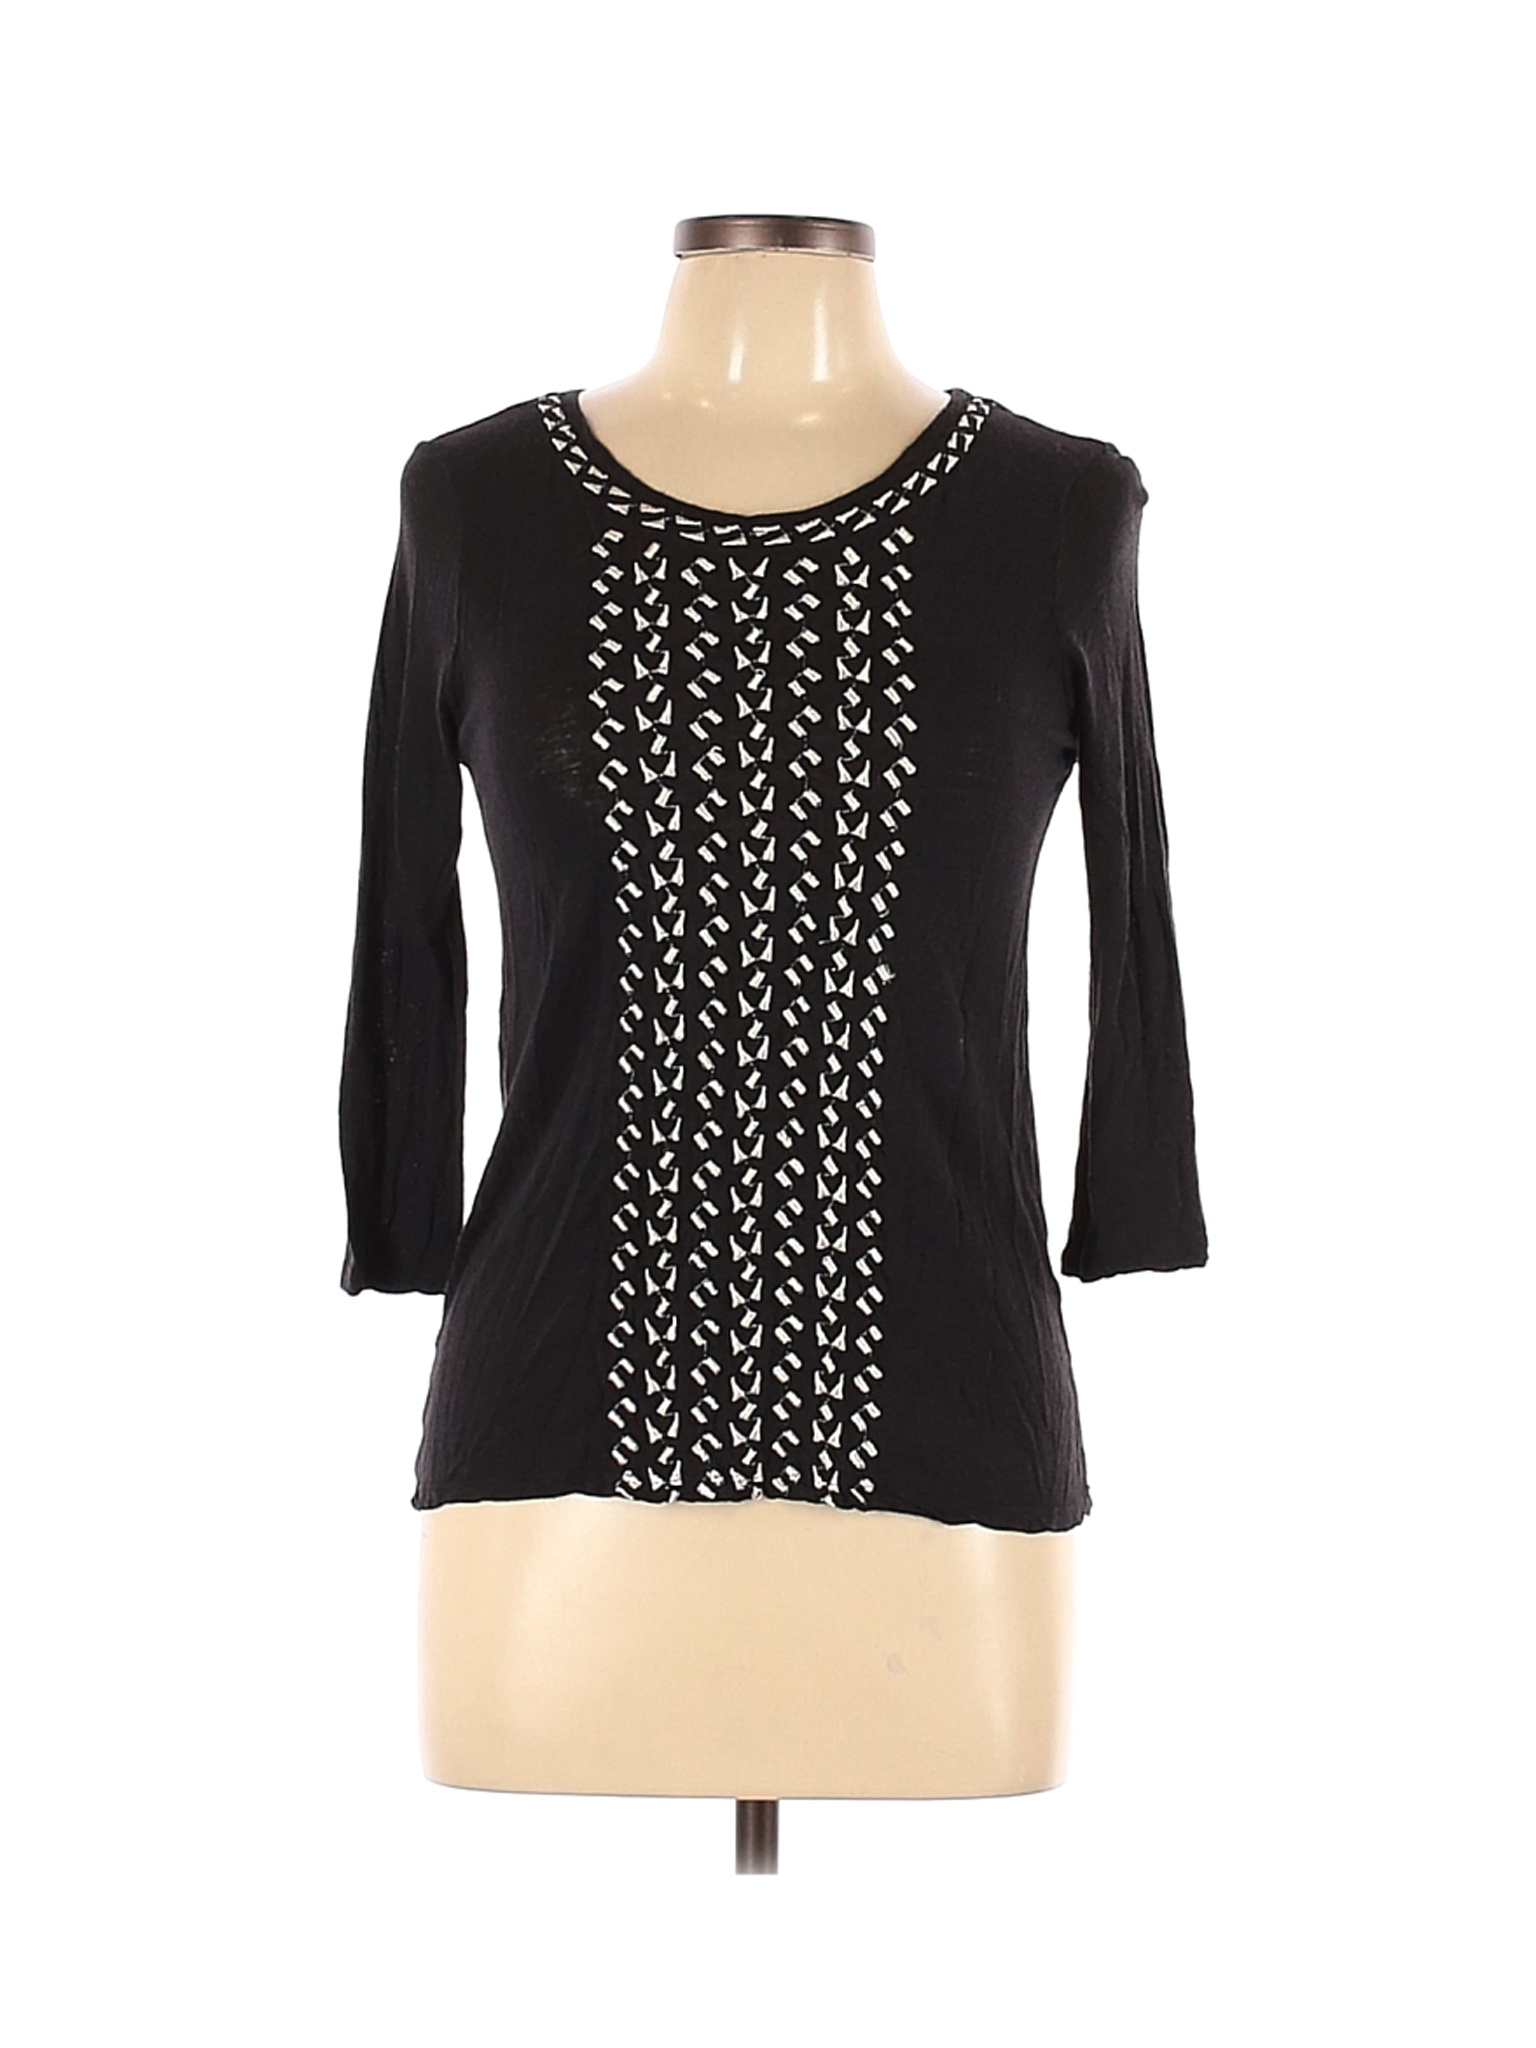 Lucky Brand Women Black 3/4 Sleeve Top XS | eBay